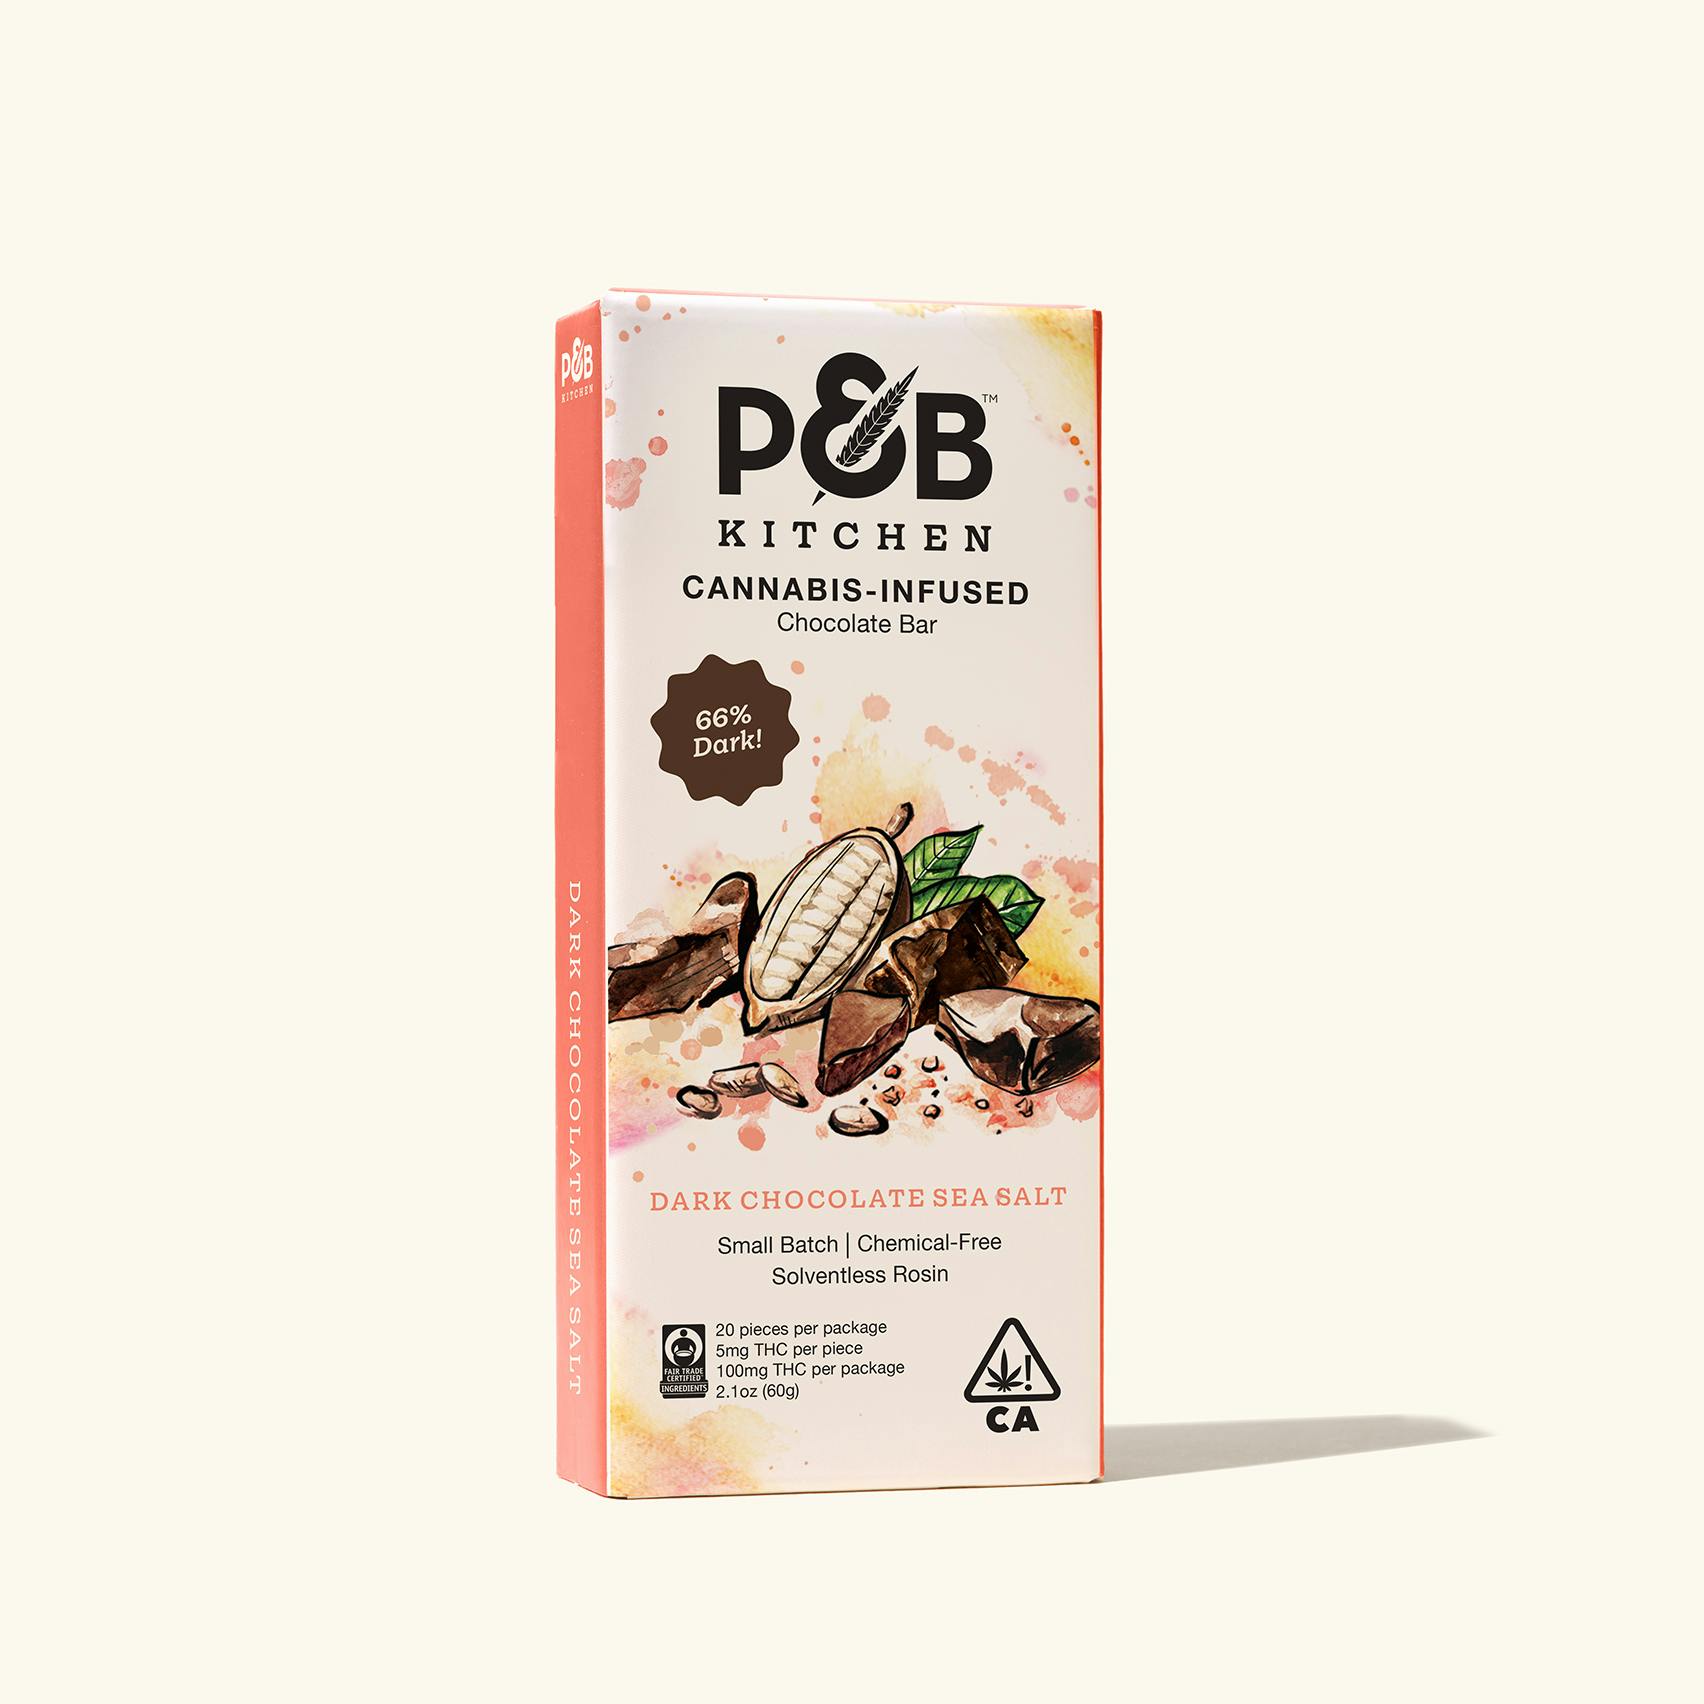 PB Kitchen Dark Chocolate Bar Box Product Image PDP Main Gallery Cream 01